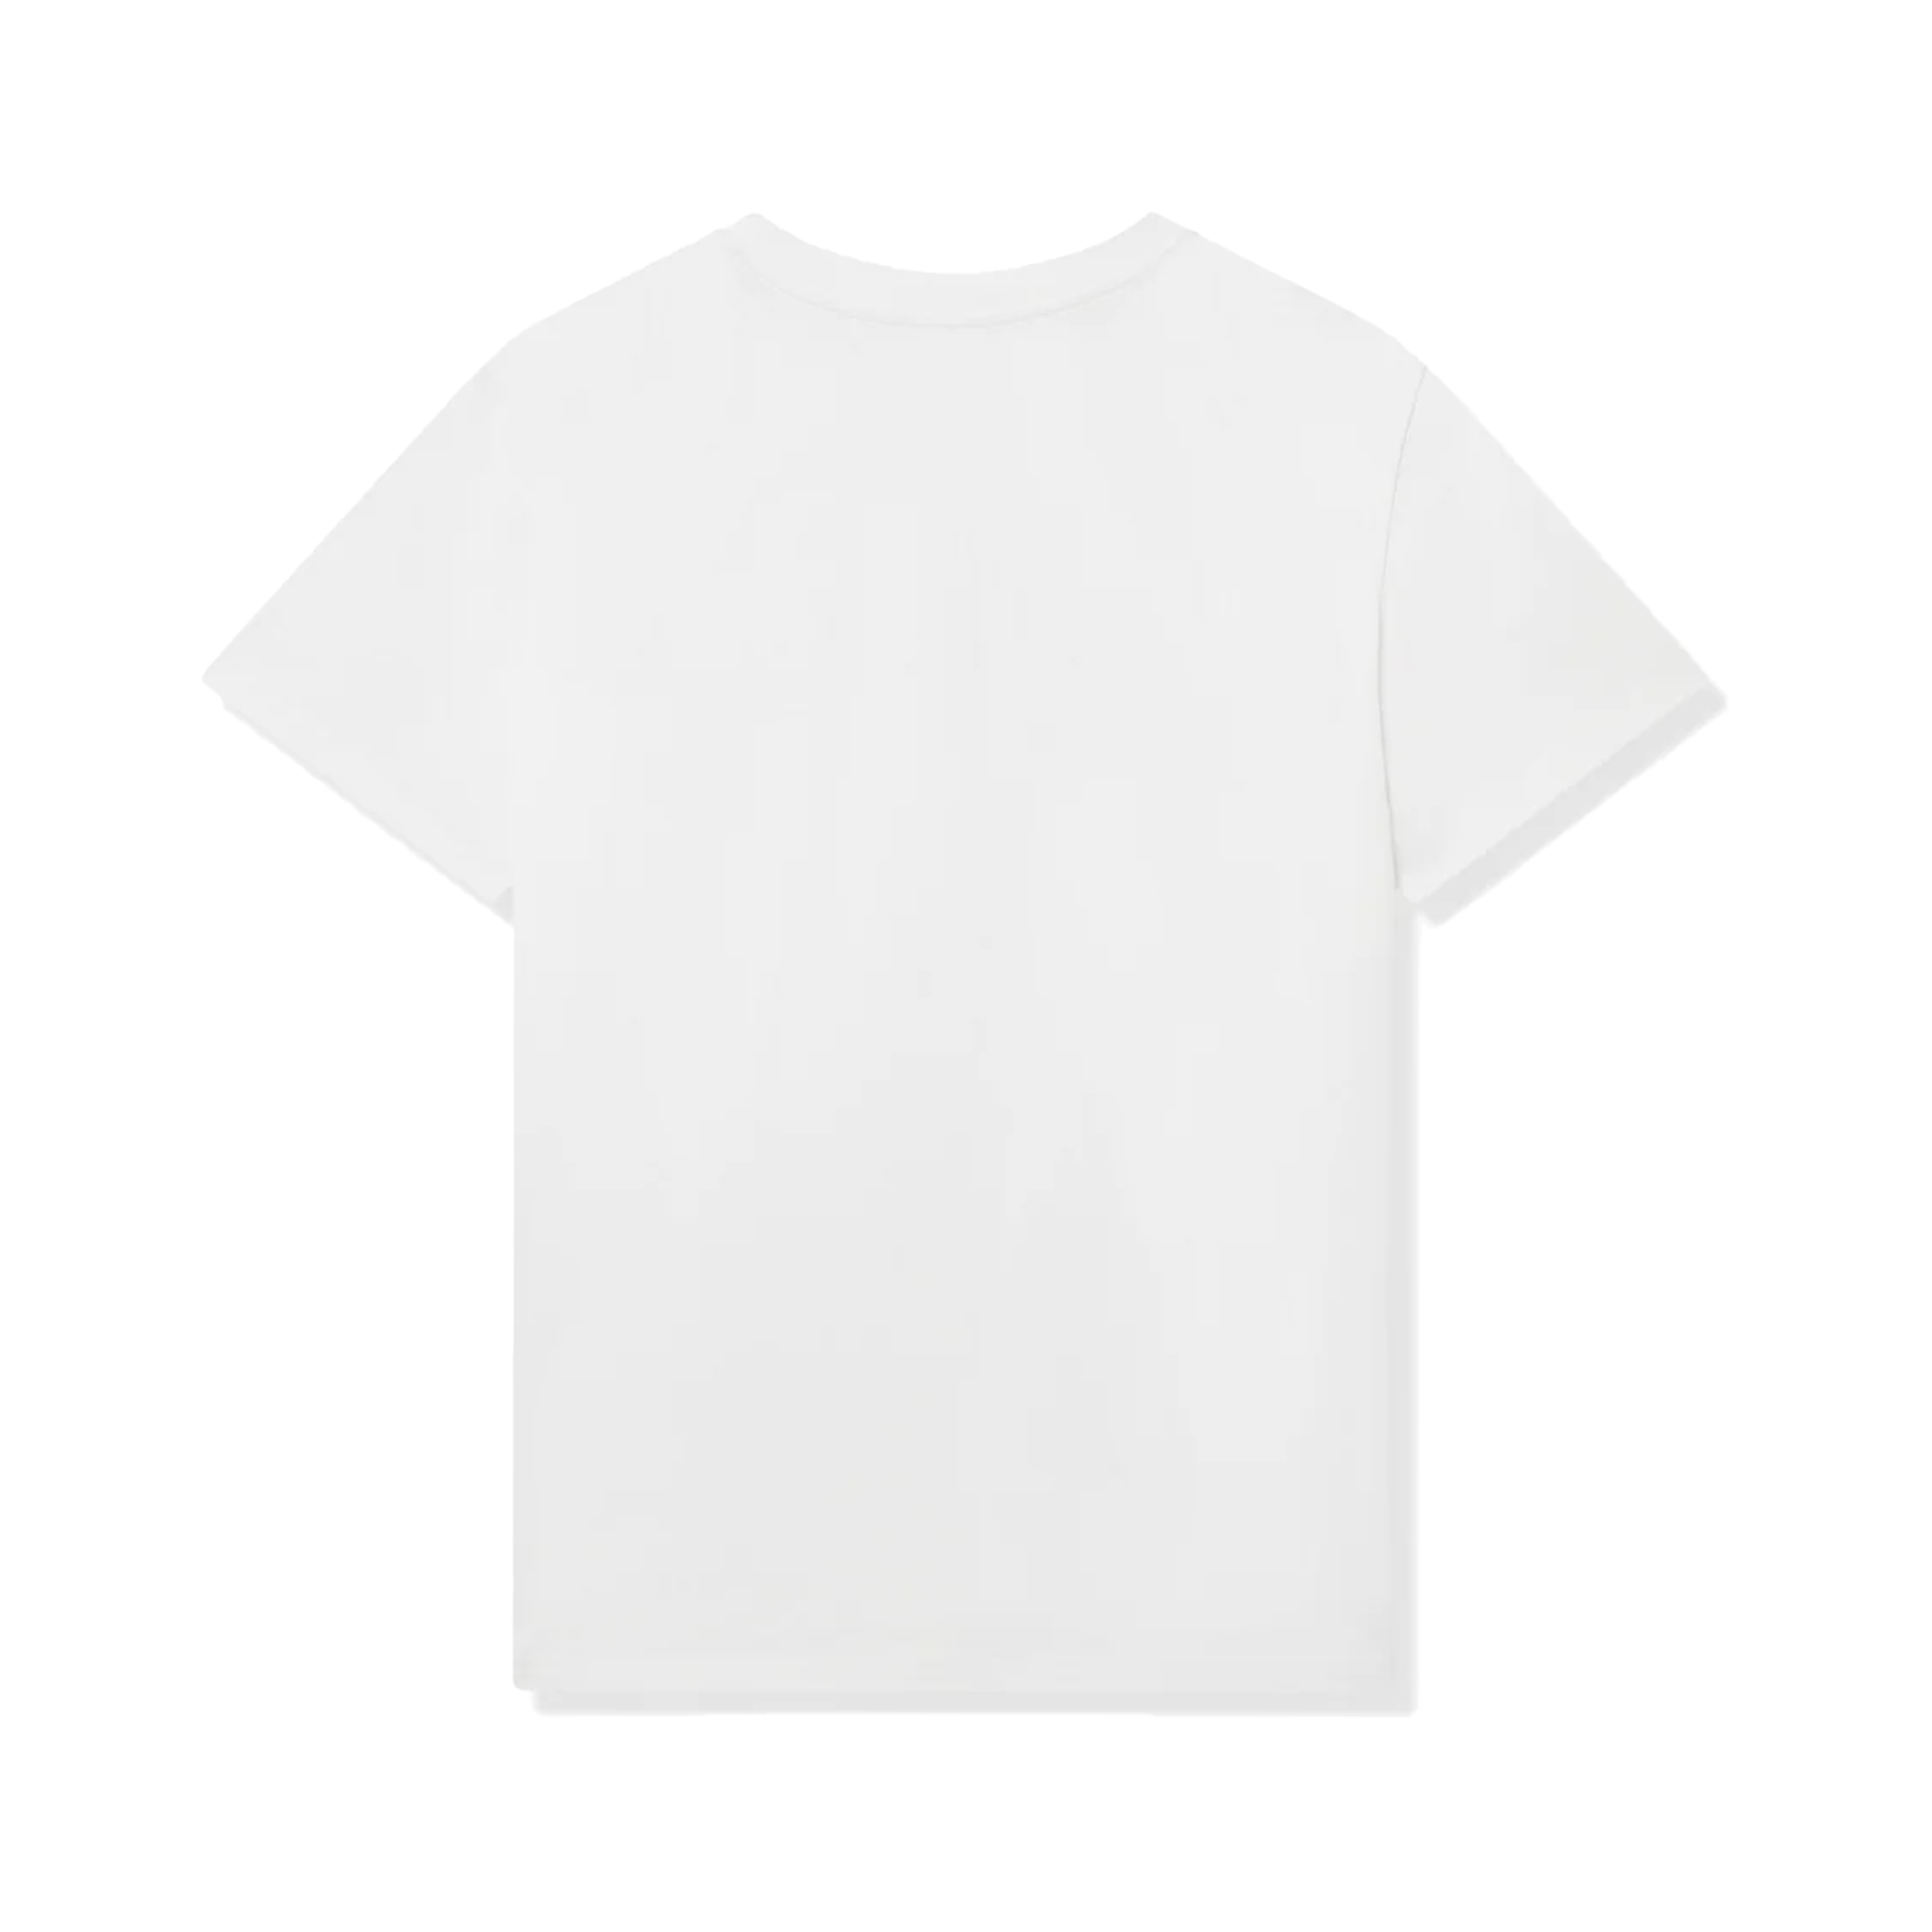 White AM Paint Drip T-Shirt. – vectordesignerclothing